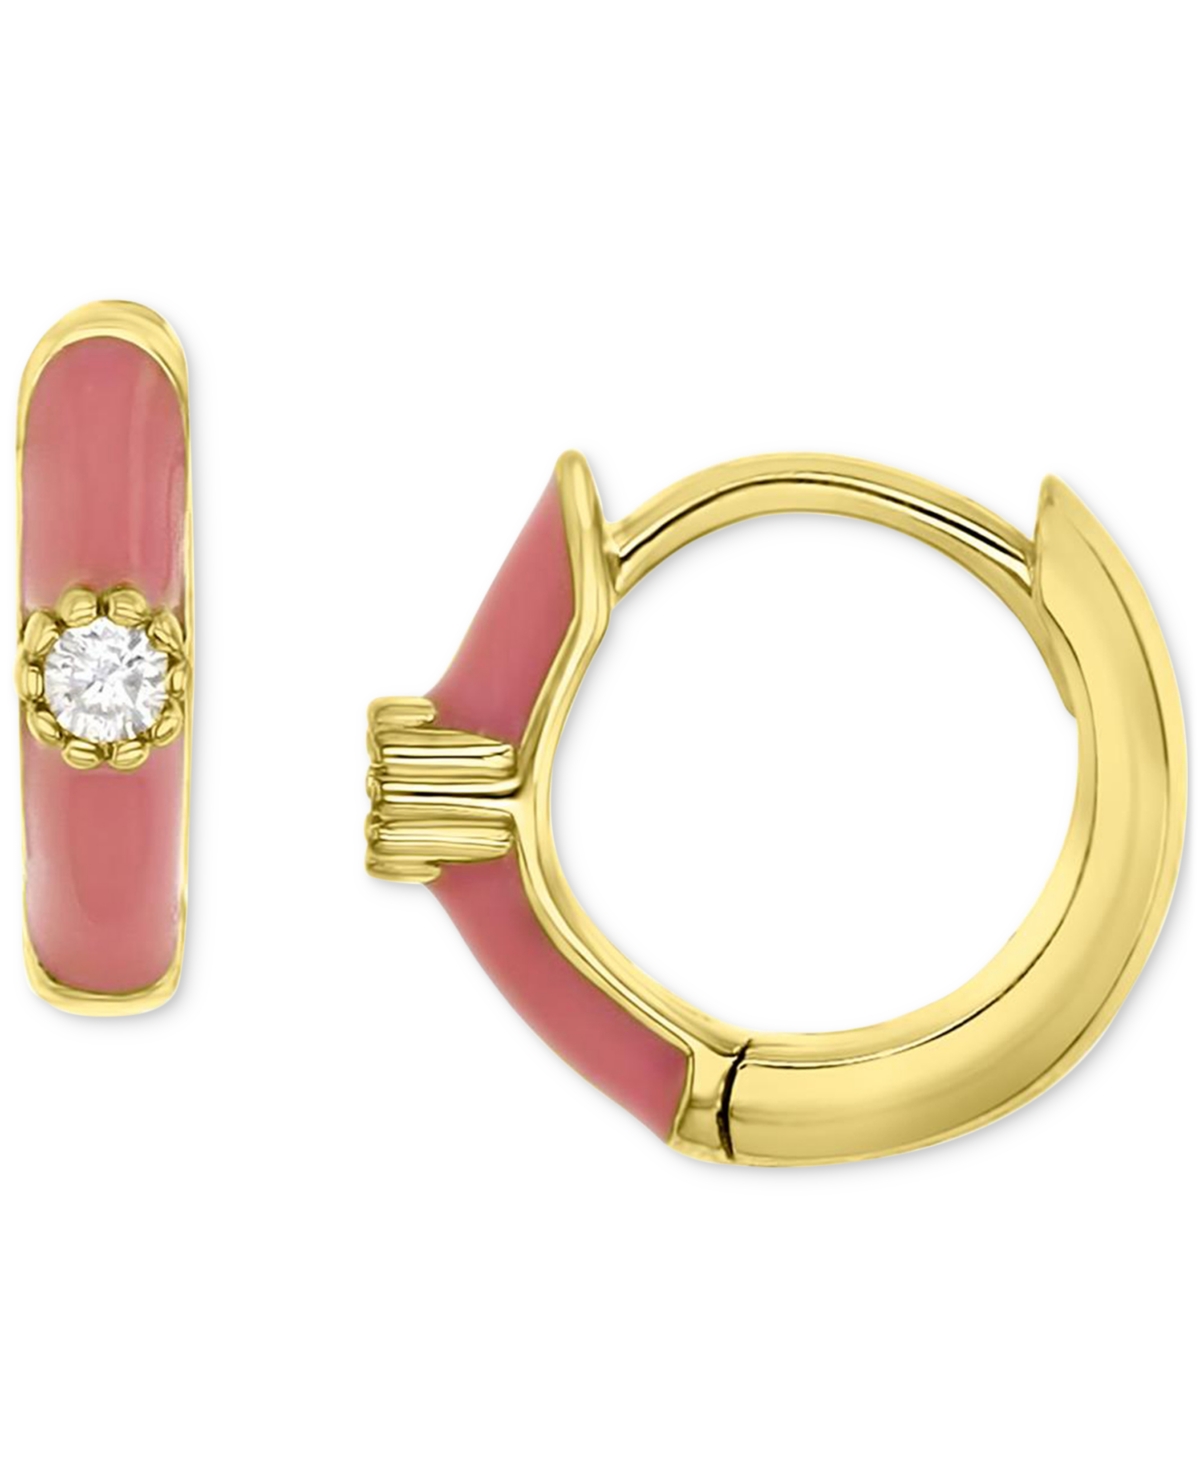 Cubic Zirconia & Enamel Small Hoop Earrings in 14k Gold-Plated Sterling Silver, 0.59" - Pink